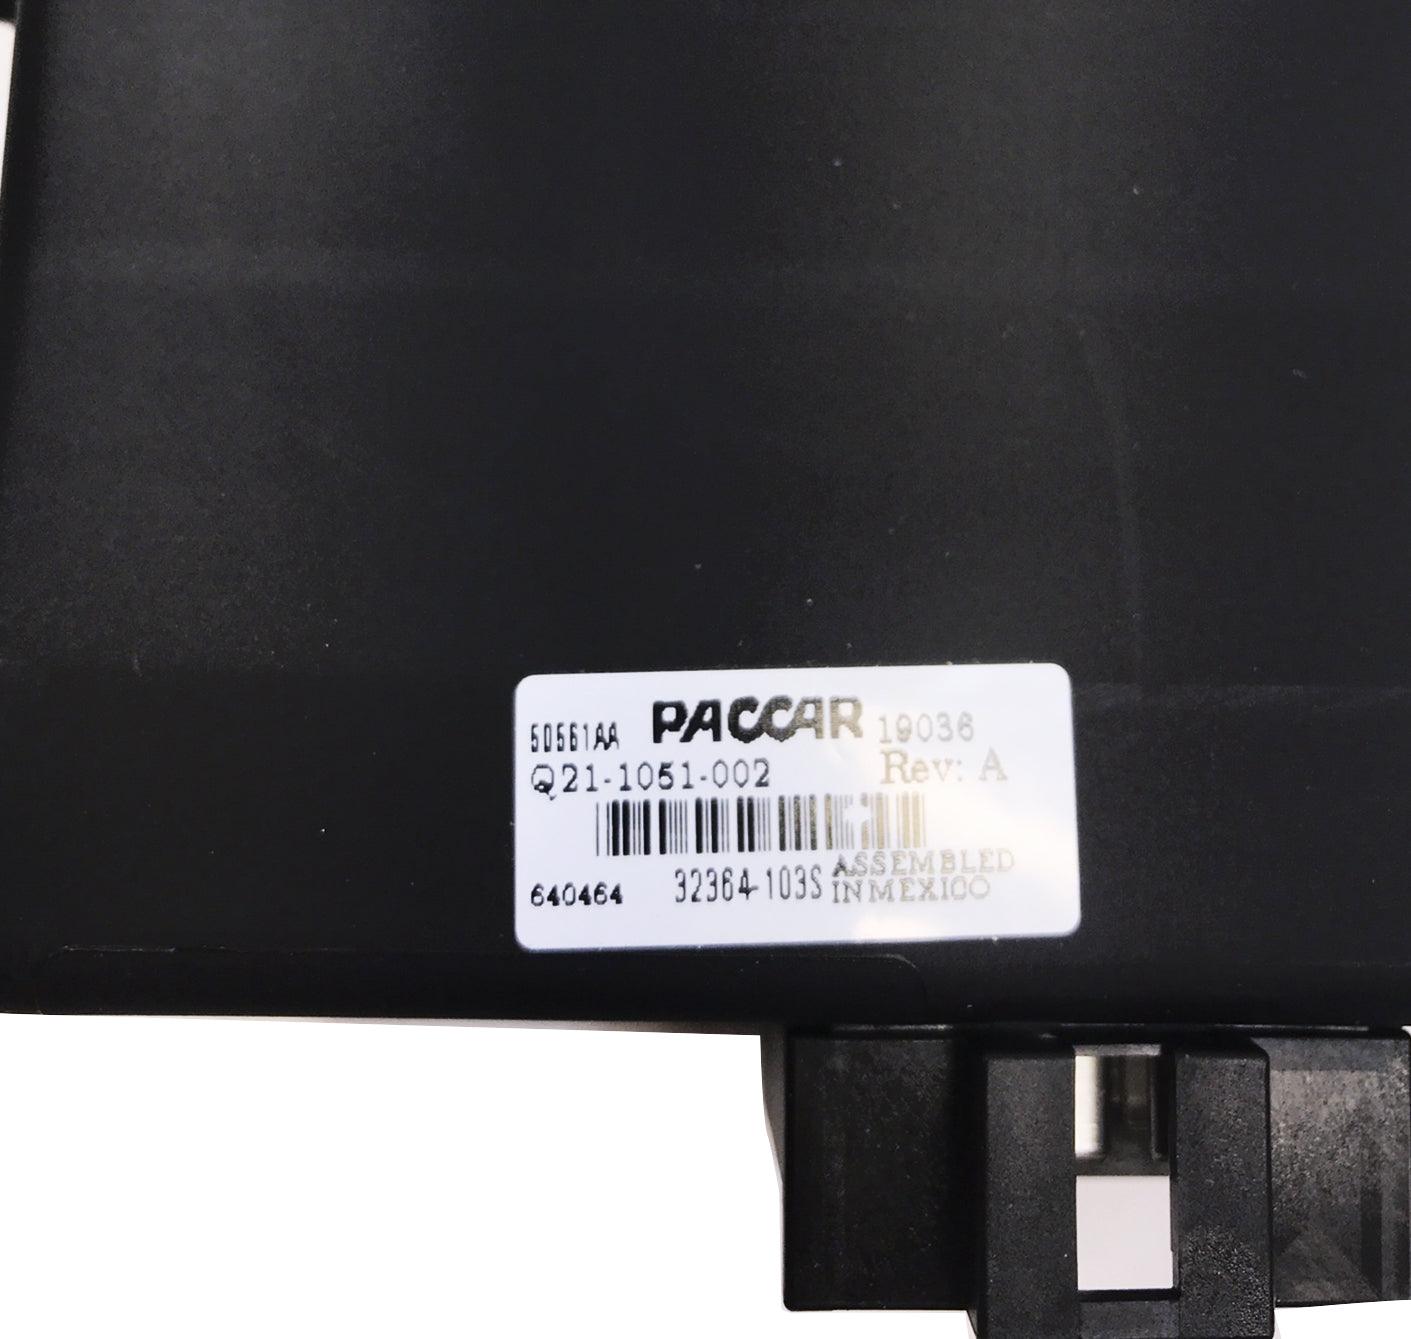 Q21-1051-002 Genuine Paccar Control Door Relay For Kenworth & Peterbilt - ADVANCED TRUCK PARTS